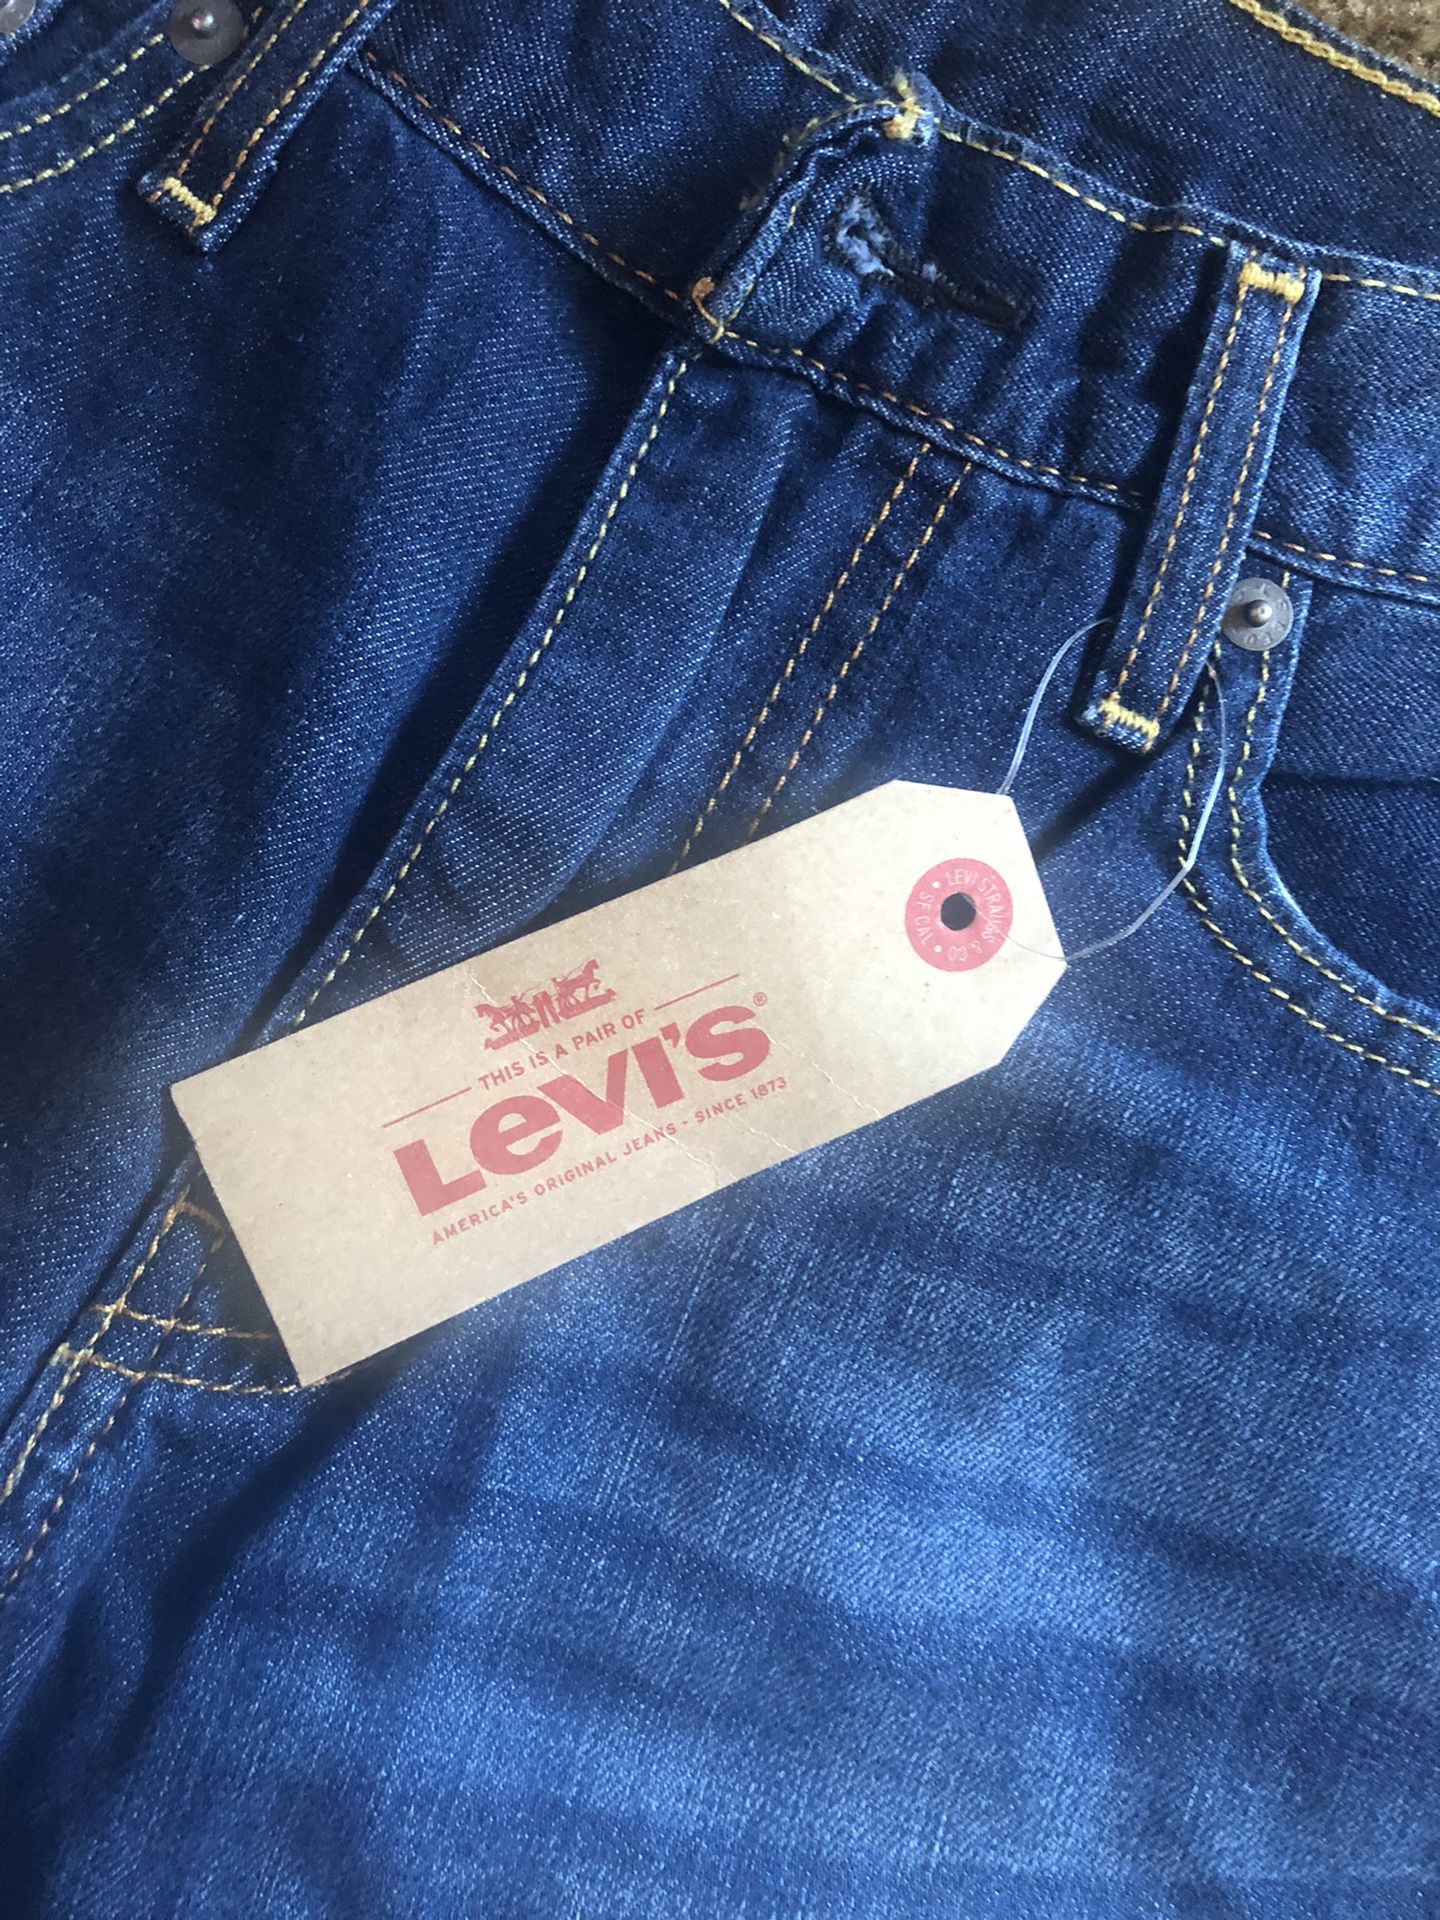 Levi’s Straus Jeans